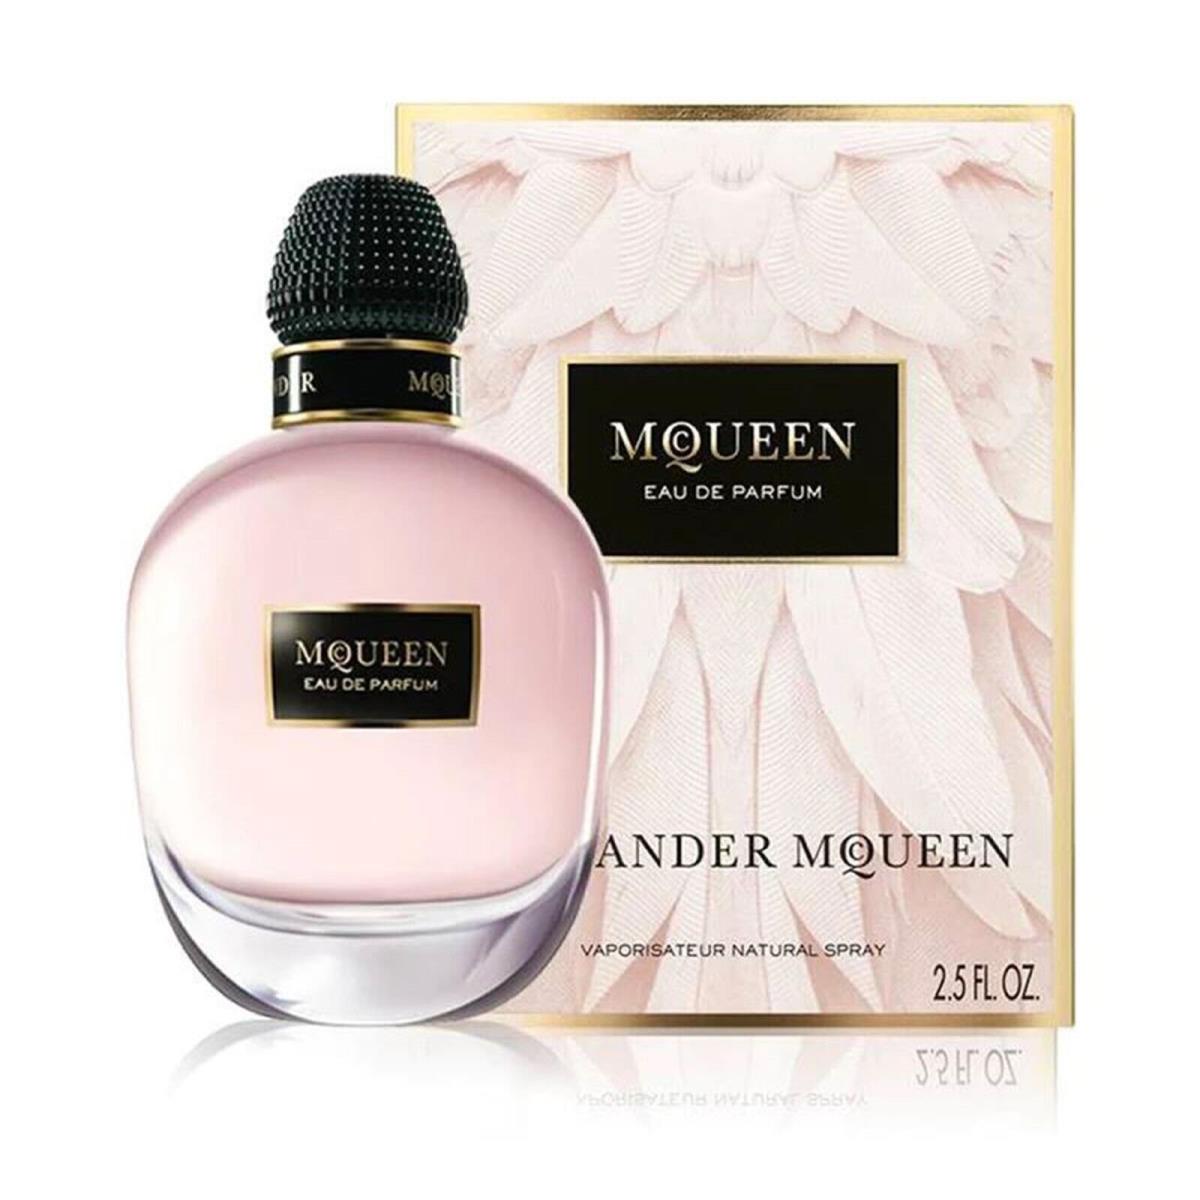 Alexander McQueen perfume,cologne,fragrance,parfum 